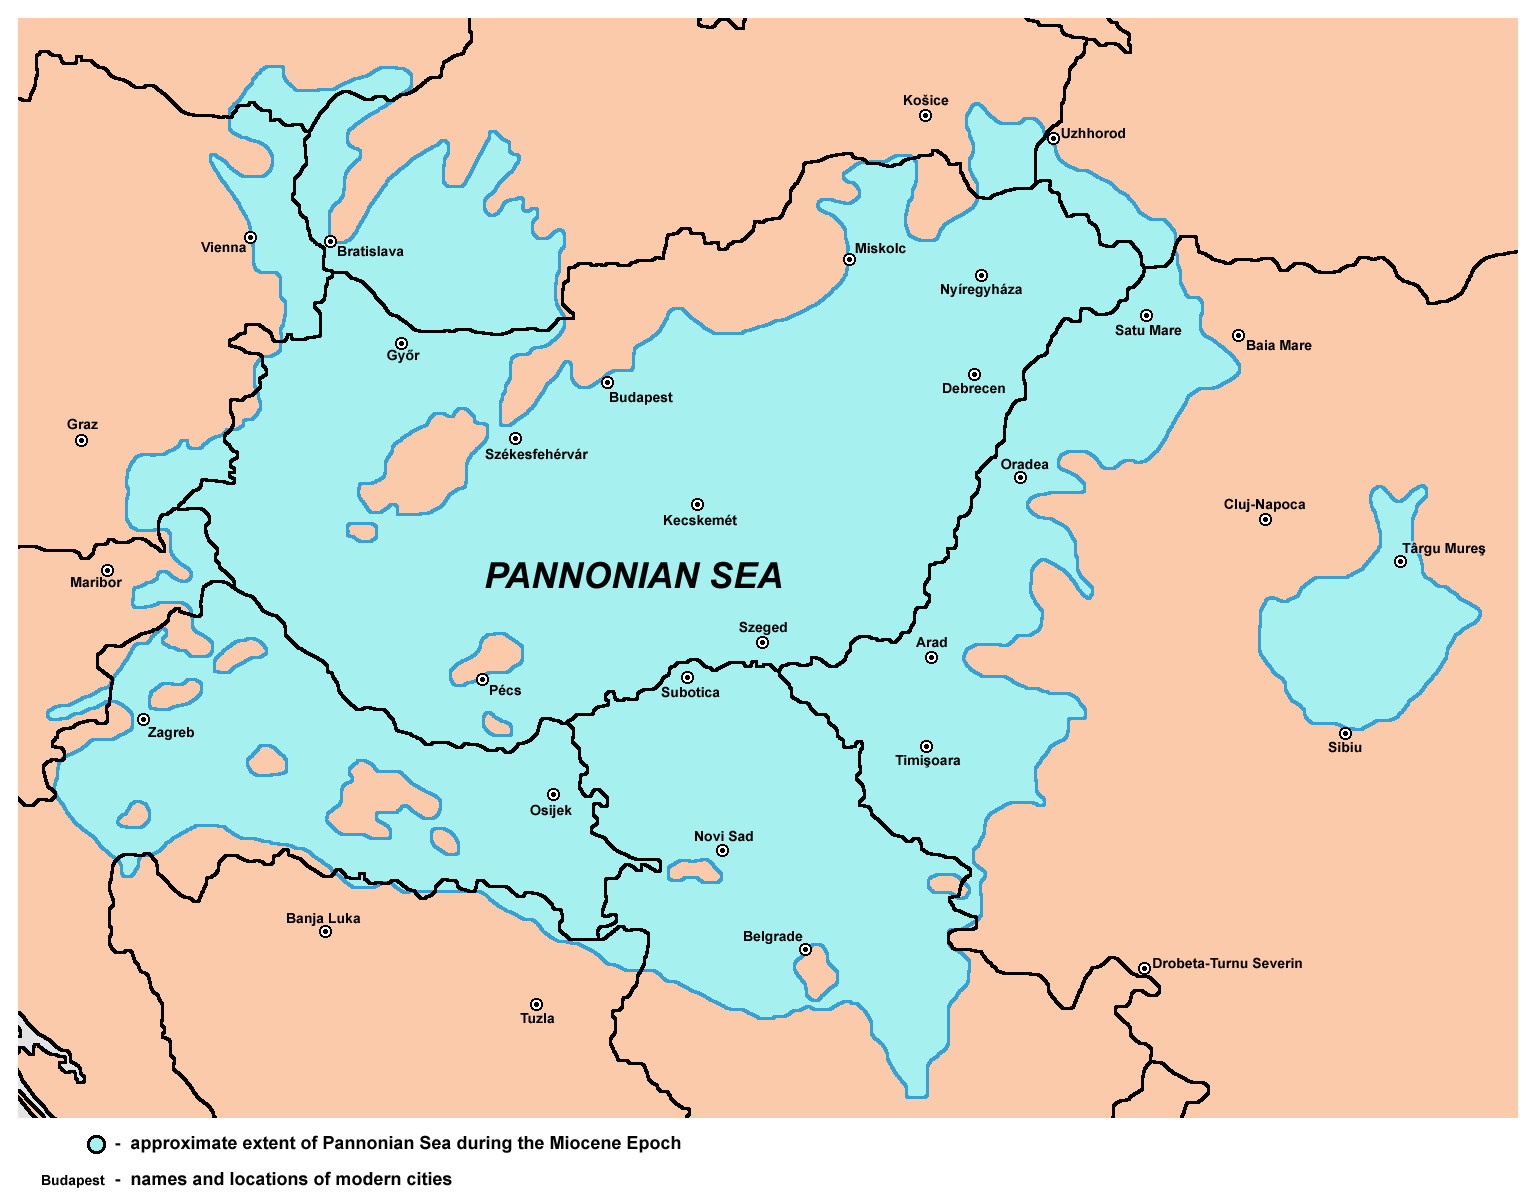 Vojvodina: Europe's Newest Old Autonomous Region - GeoCurrents